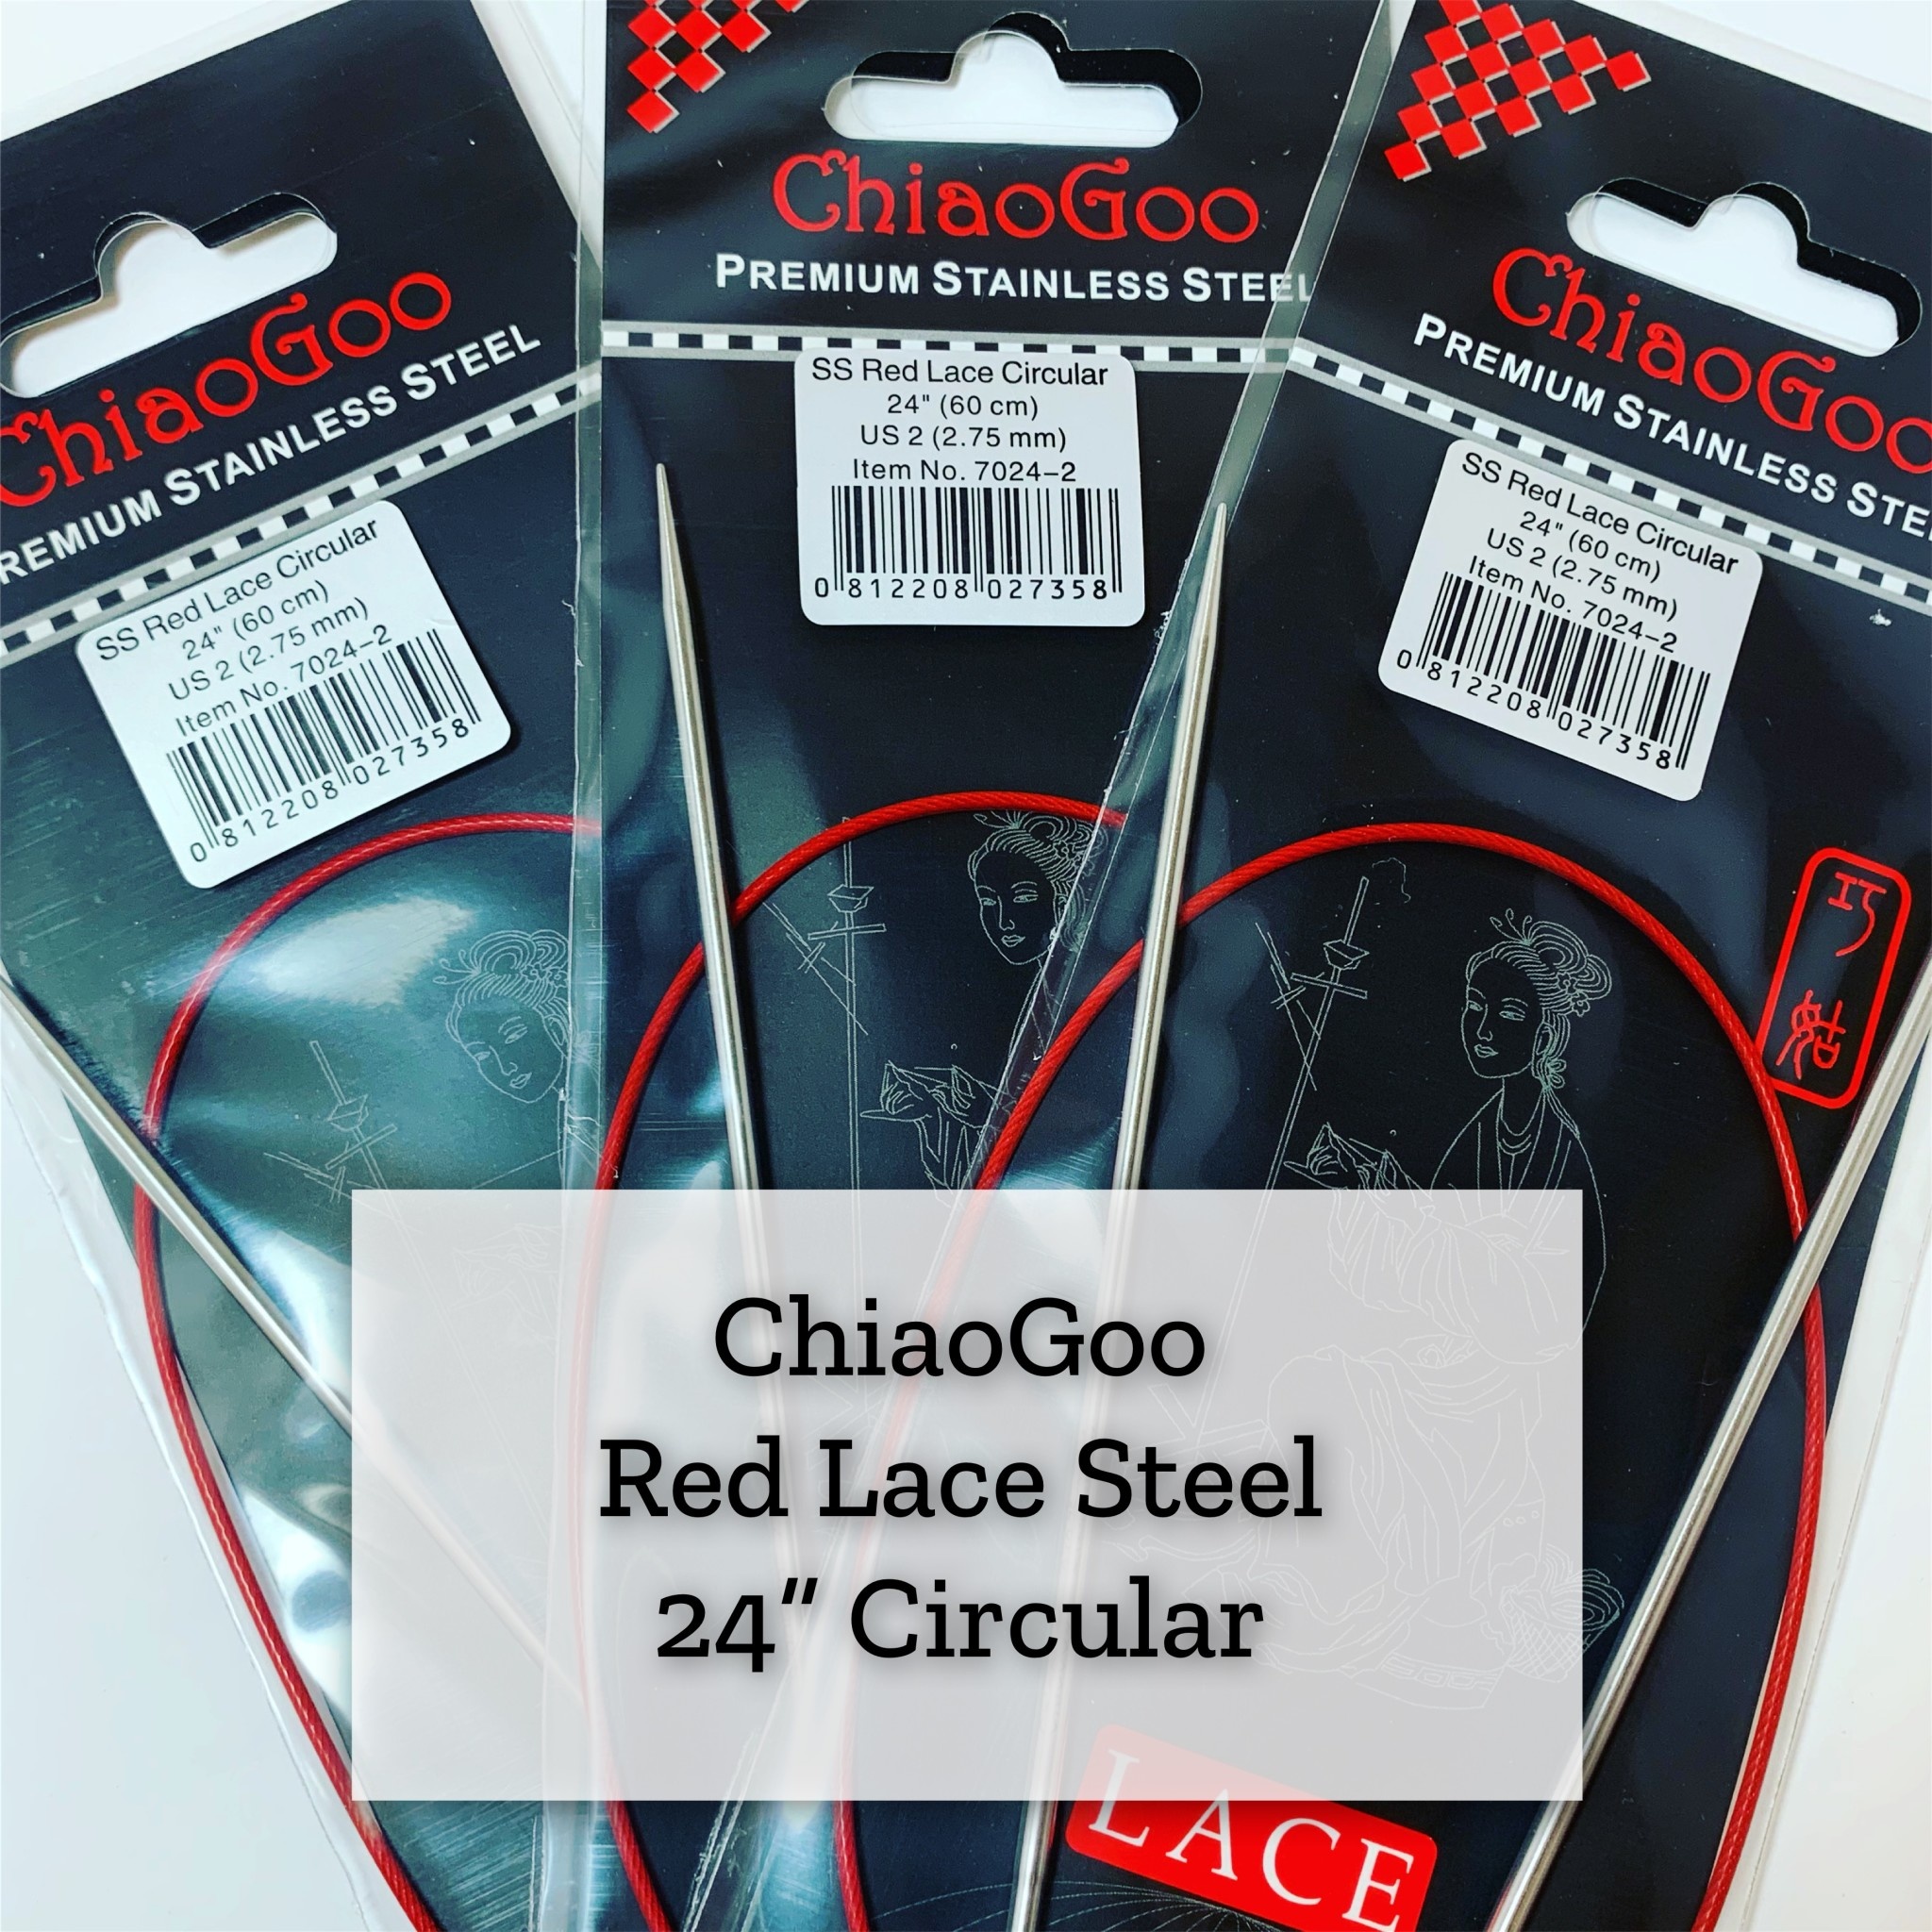 ChiaoGoo Red Lace Steel - 24" 3.75 mm